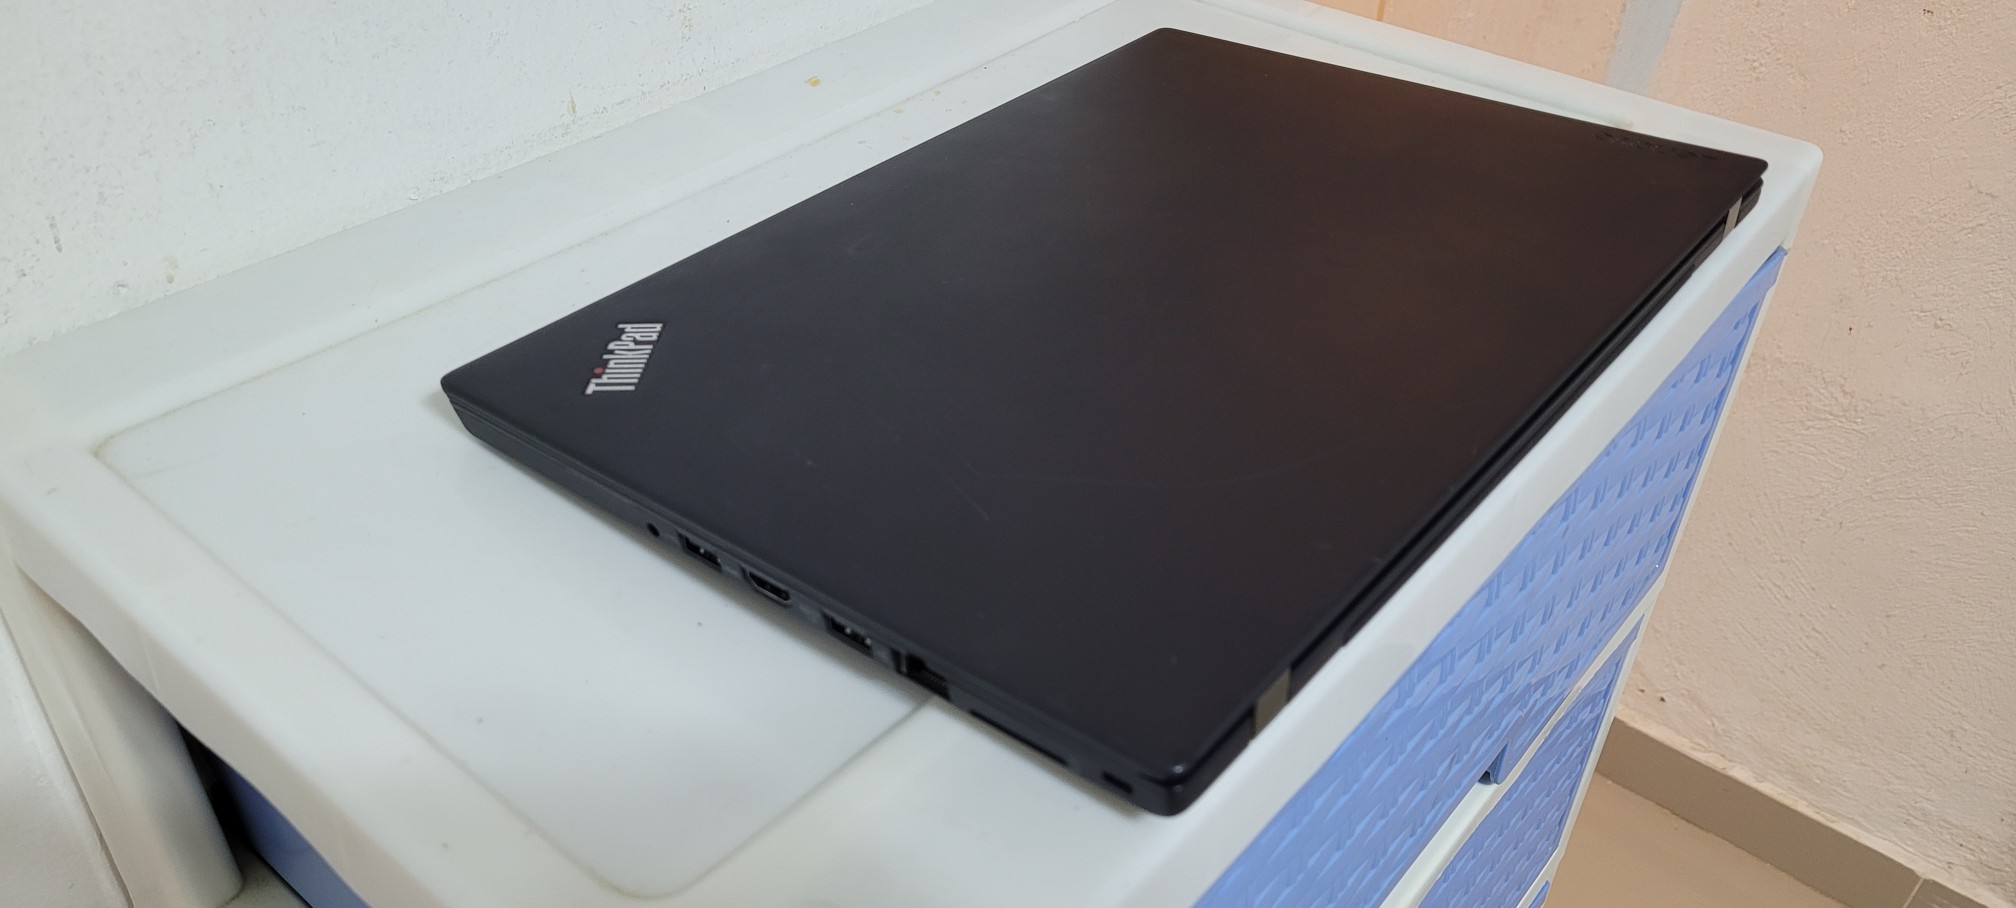 computadoras y laptops - Lenovo T490 14 Pulg Core i5 10th Gen Ram 16gb ddr4 Disco 256gb Video 8gb 2